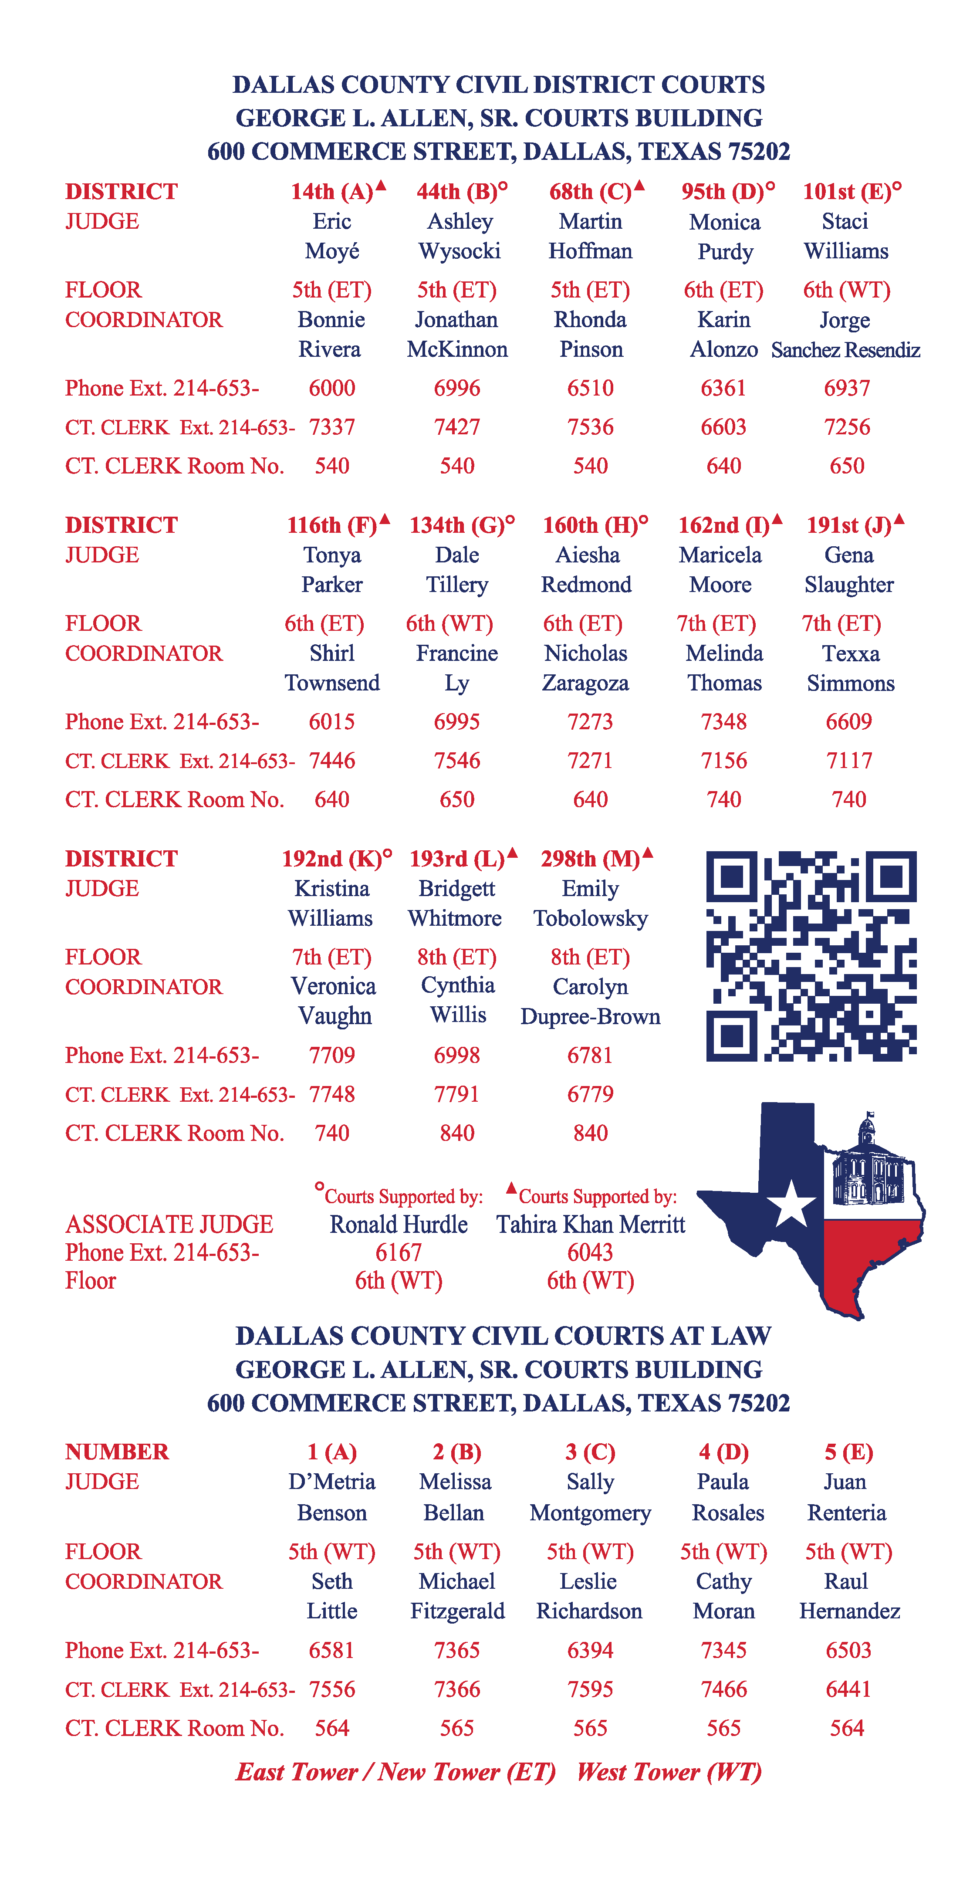 Charles Oliver Mediator 2022 Dallas County Civil Trial Calendar/Directory